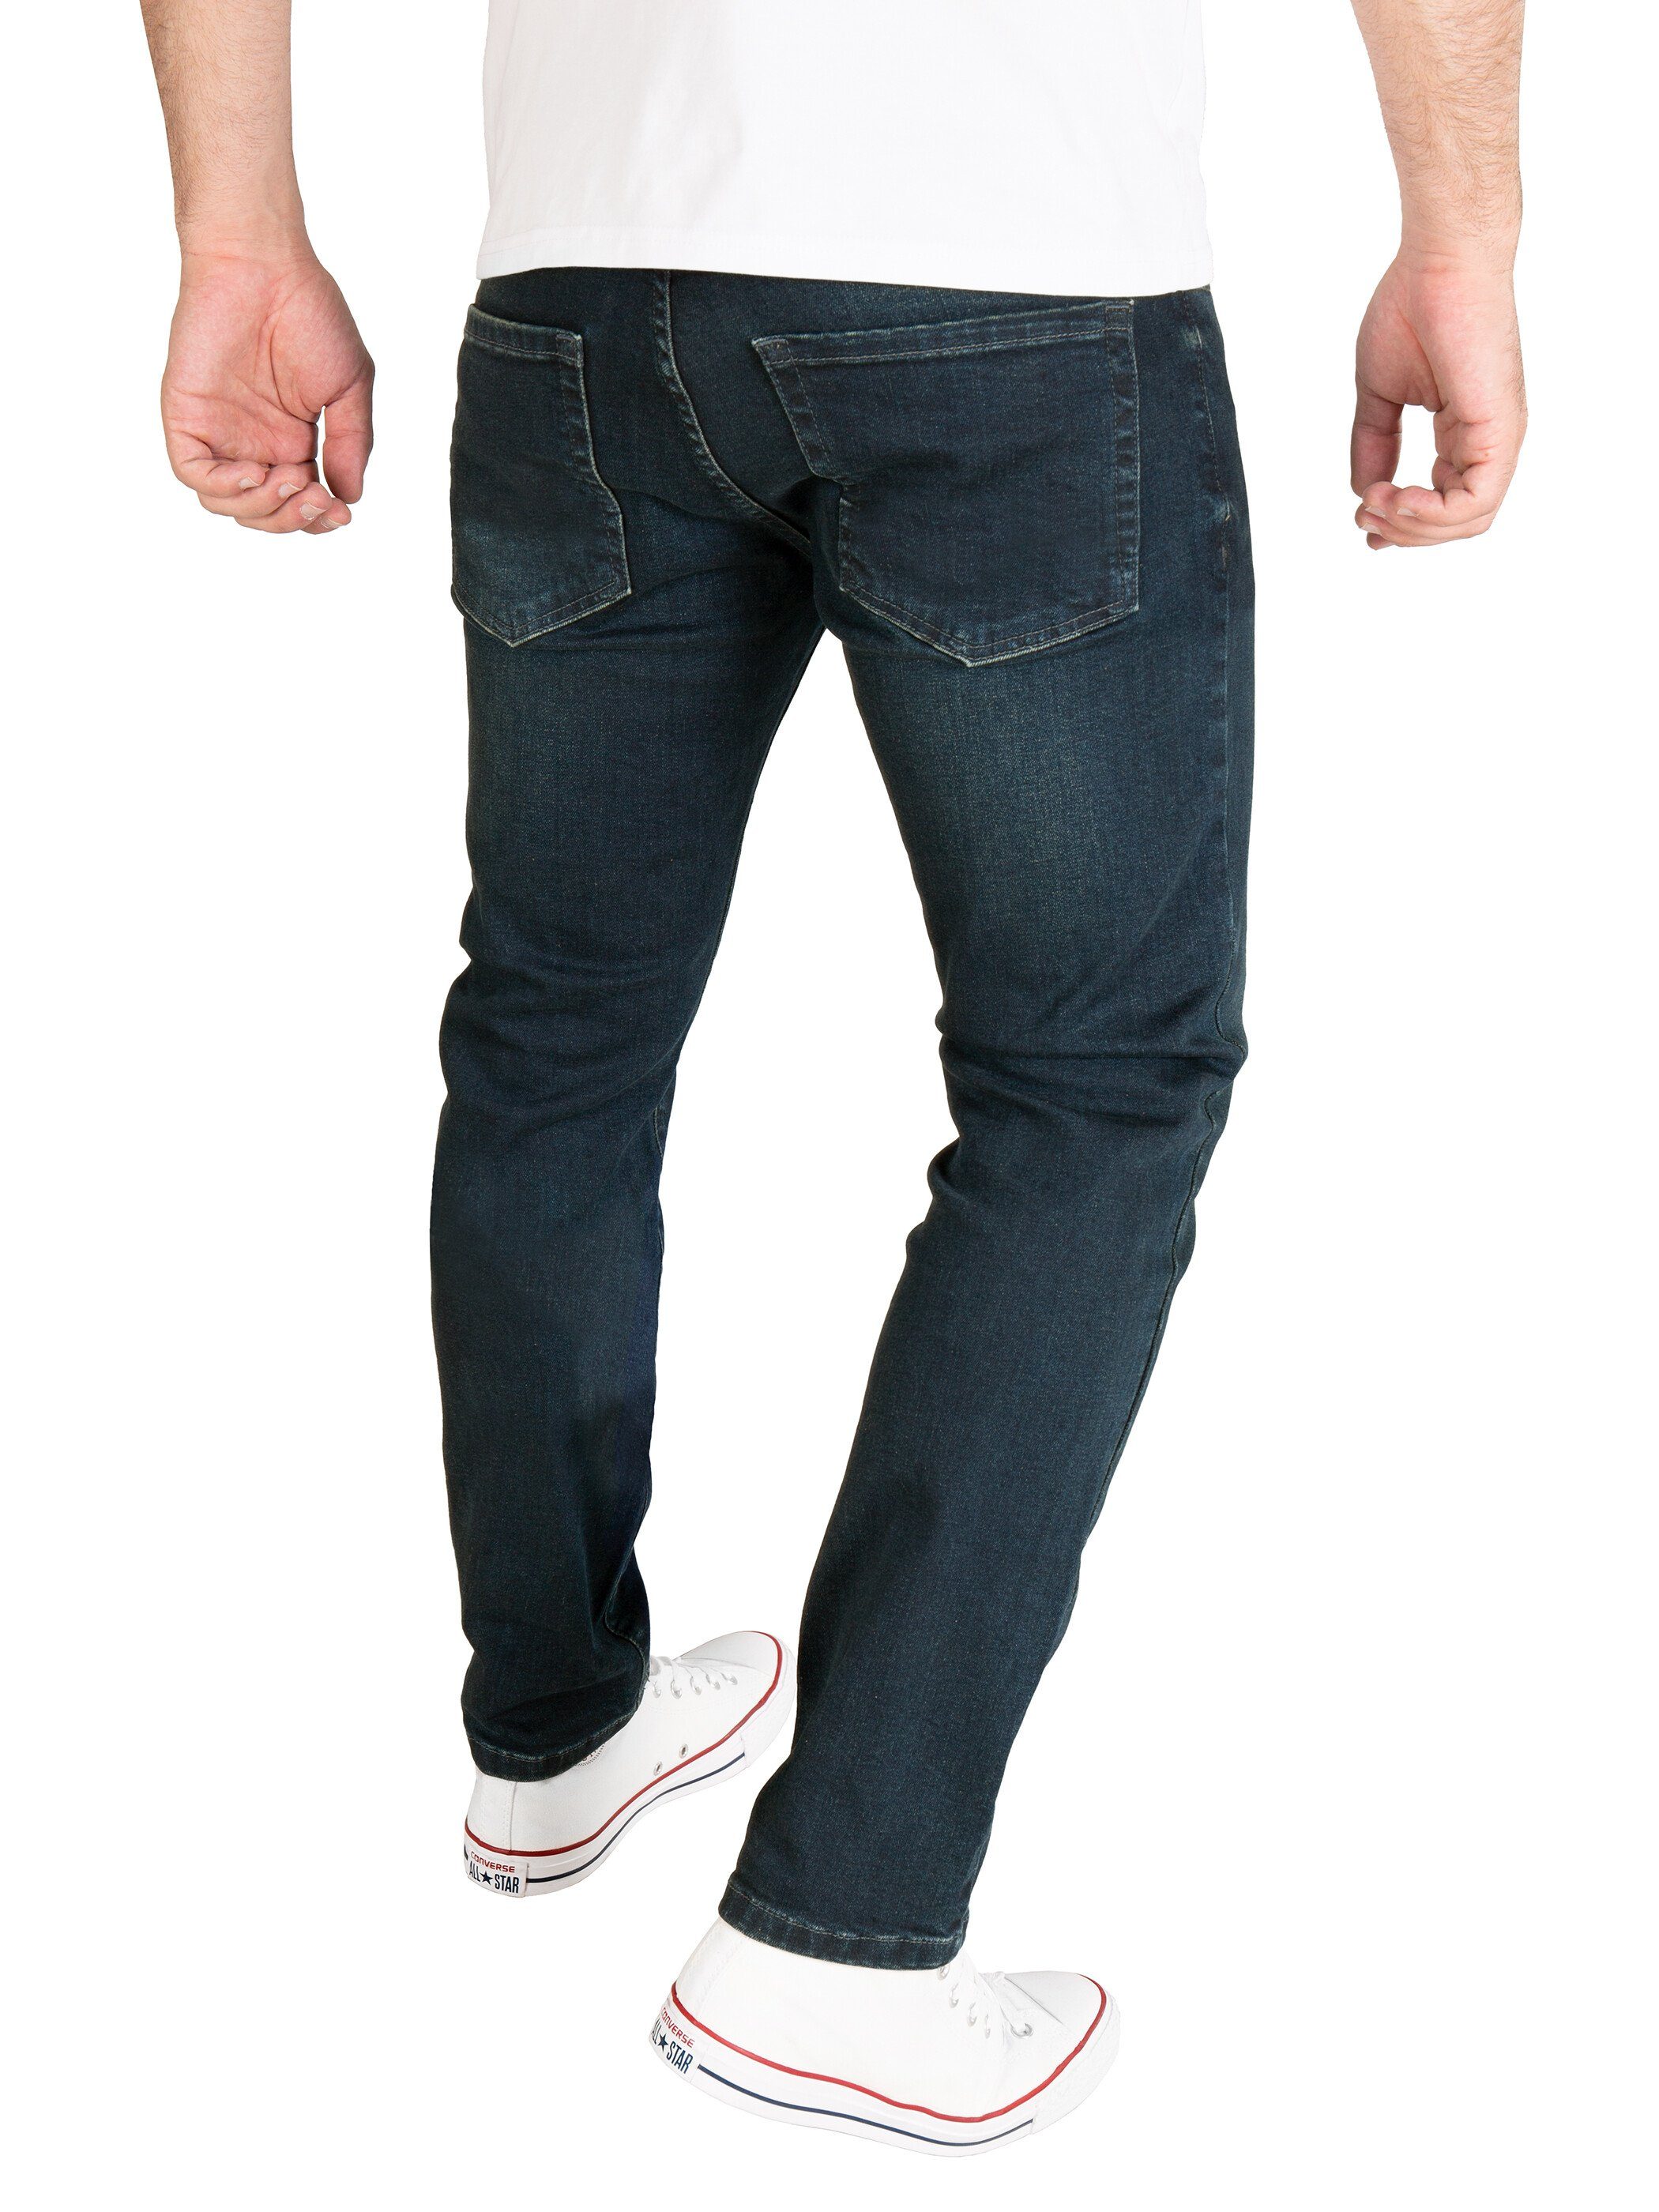 Jeanshose Akon Slim-fit-Jeans Herren modernen Yazubi Jeans Stretch Fit Blau Sapphire 194020) mit Slim (Dark